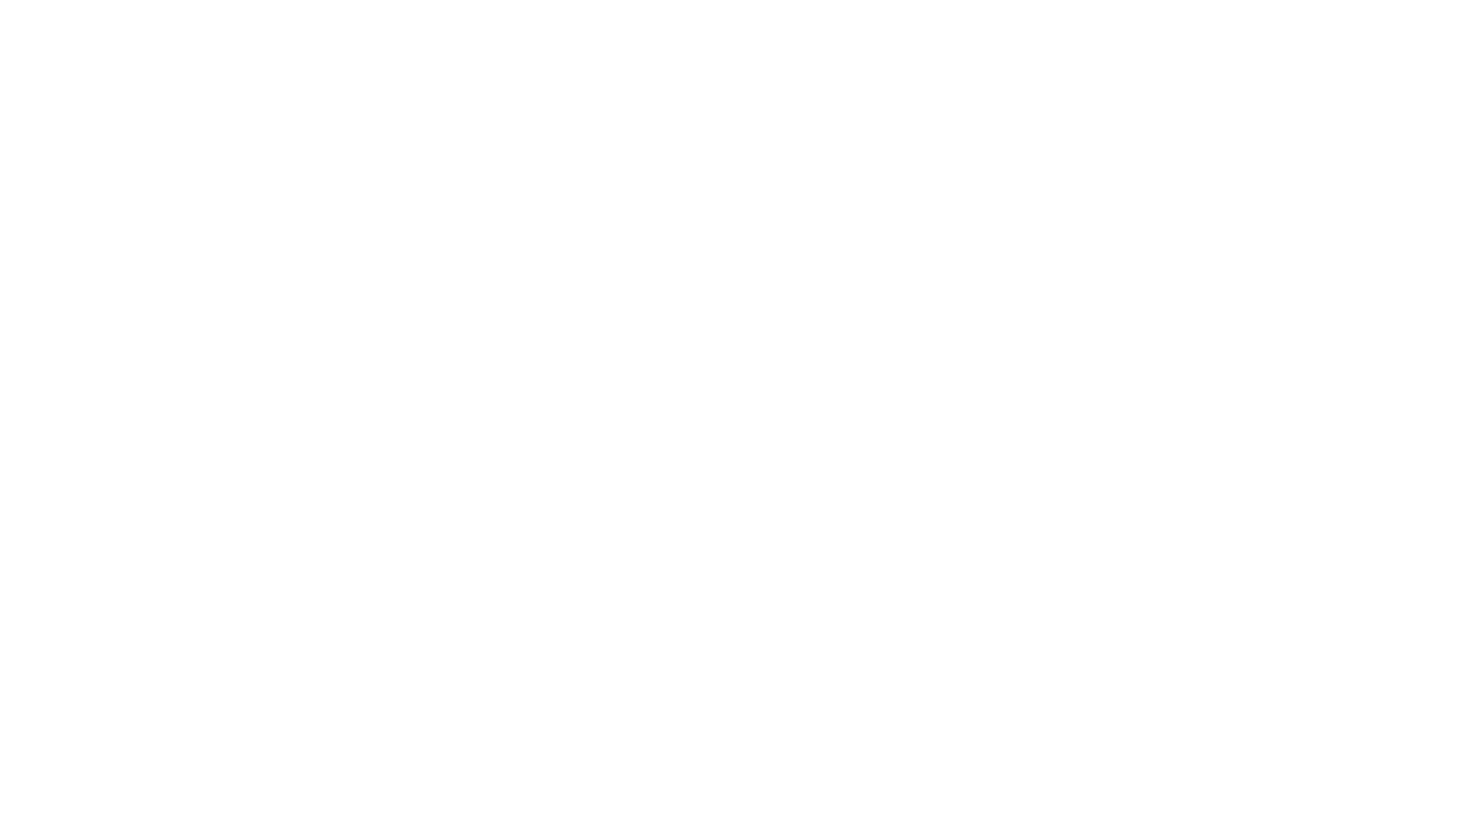 Breckenridge Grand Vacations